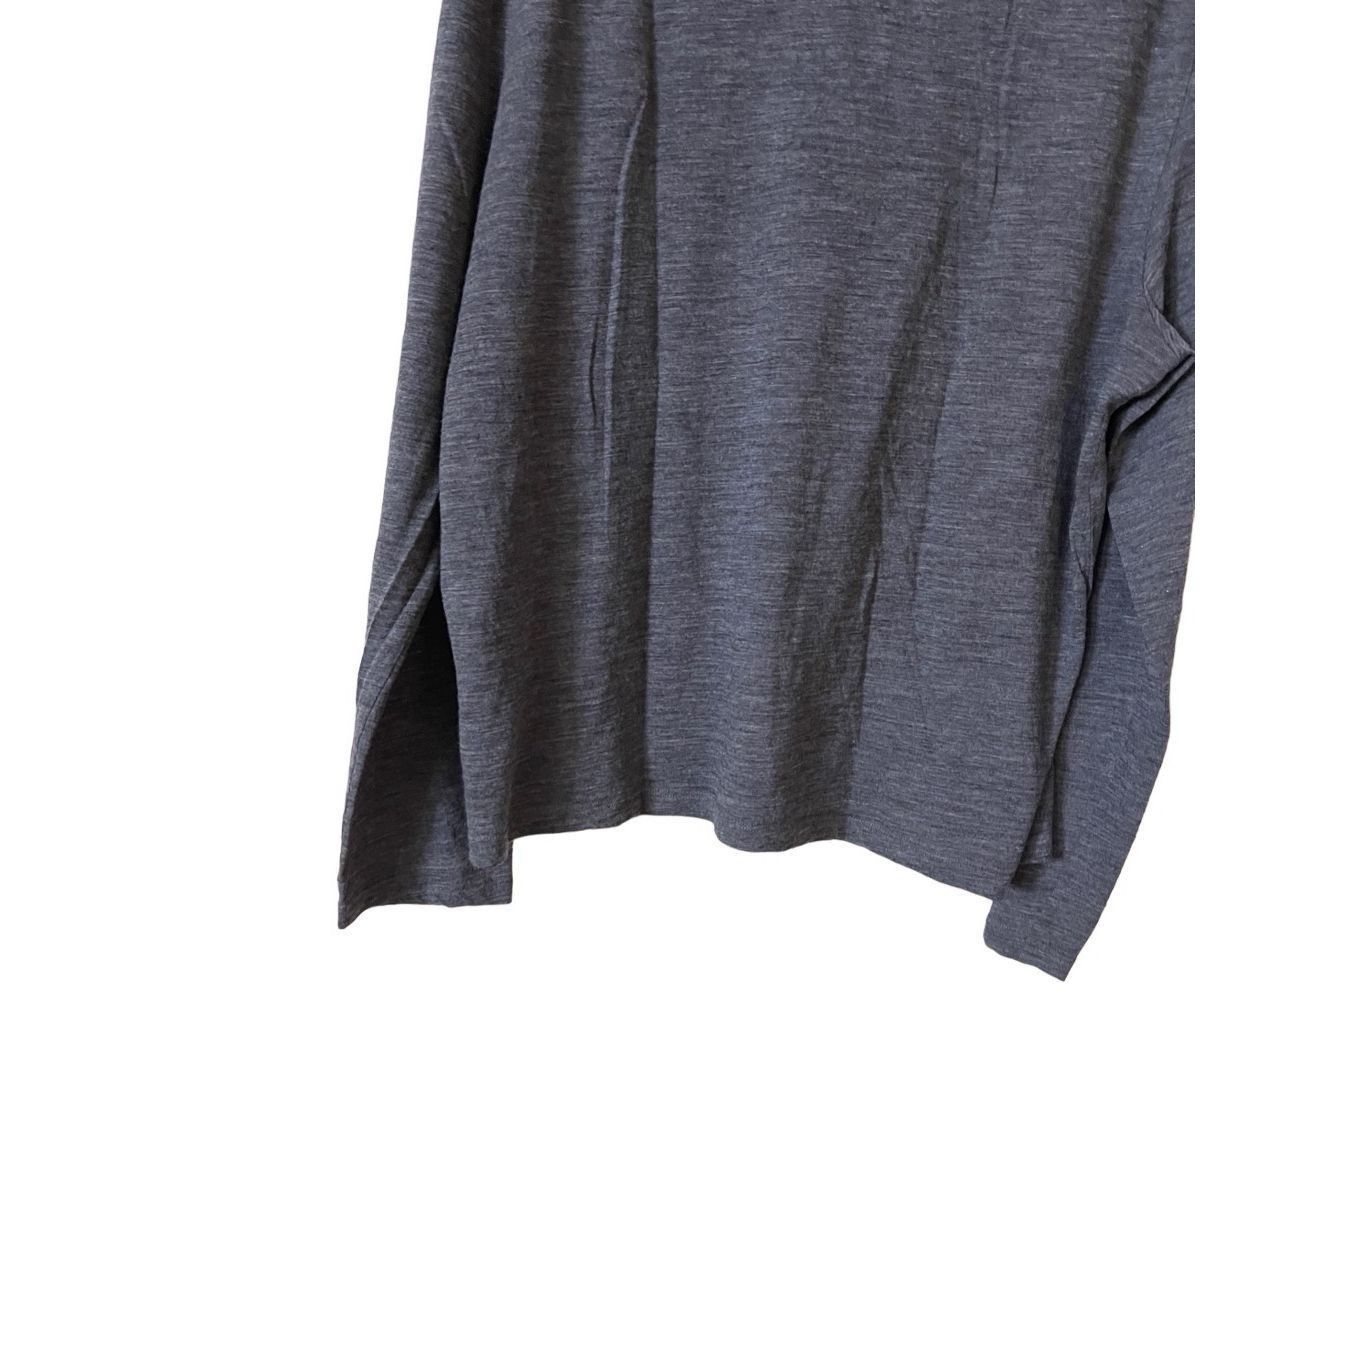 Cos COS 100% Wool Grey Crewneck Long Sleeve Lightweight Sweater Size US L / EU 52-54 / 3 - 5 Thumbnail